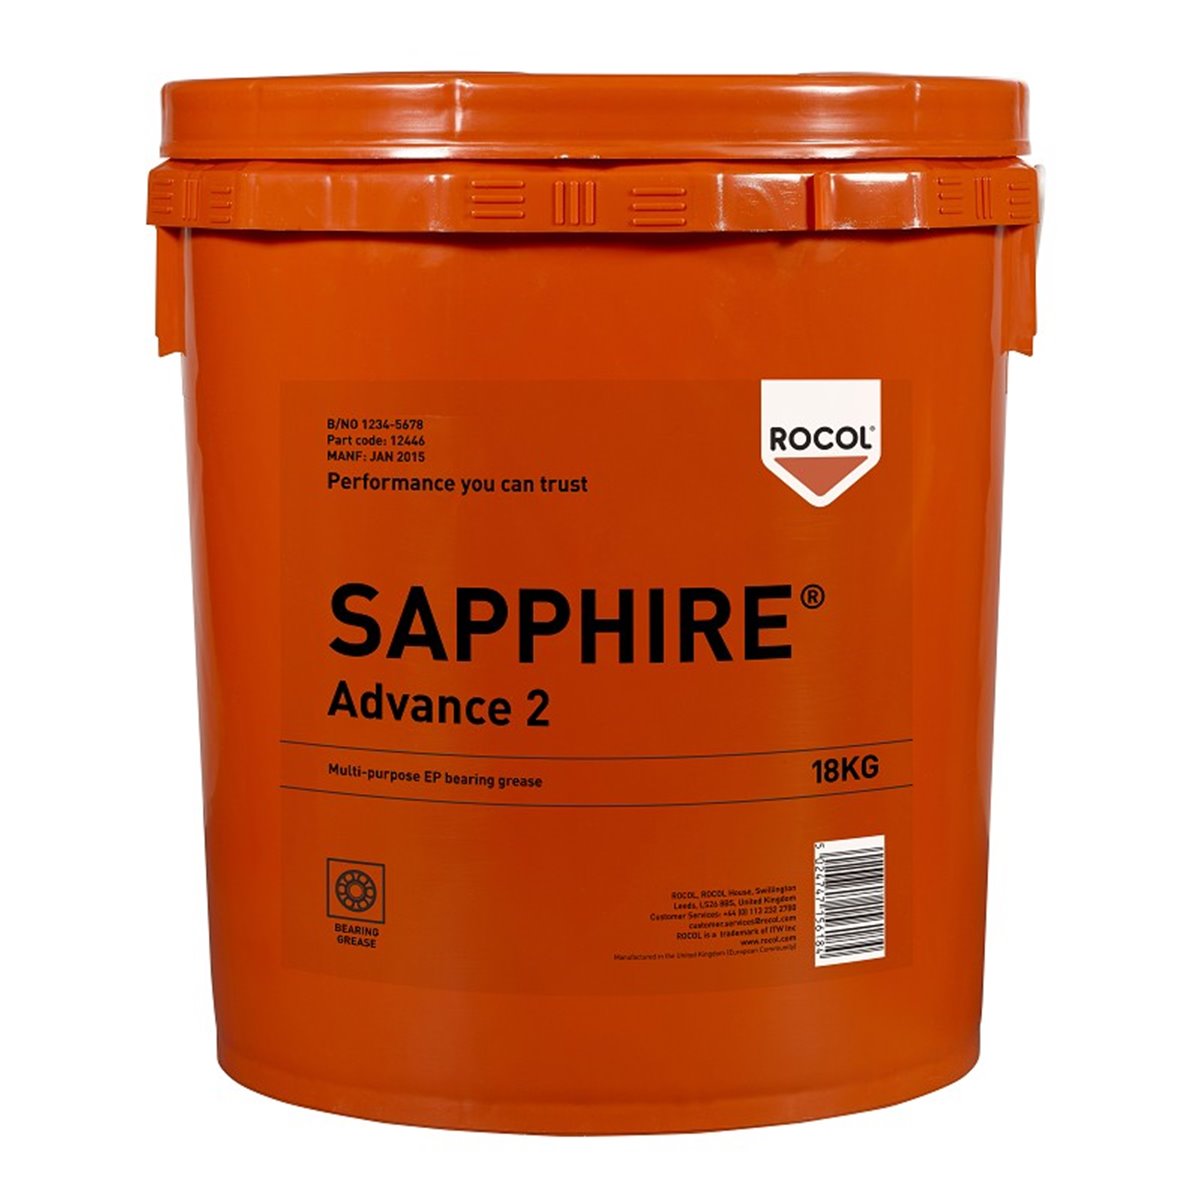 SAPPHIRE Advance 2 Rocol 18kg RS12446